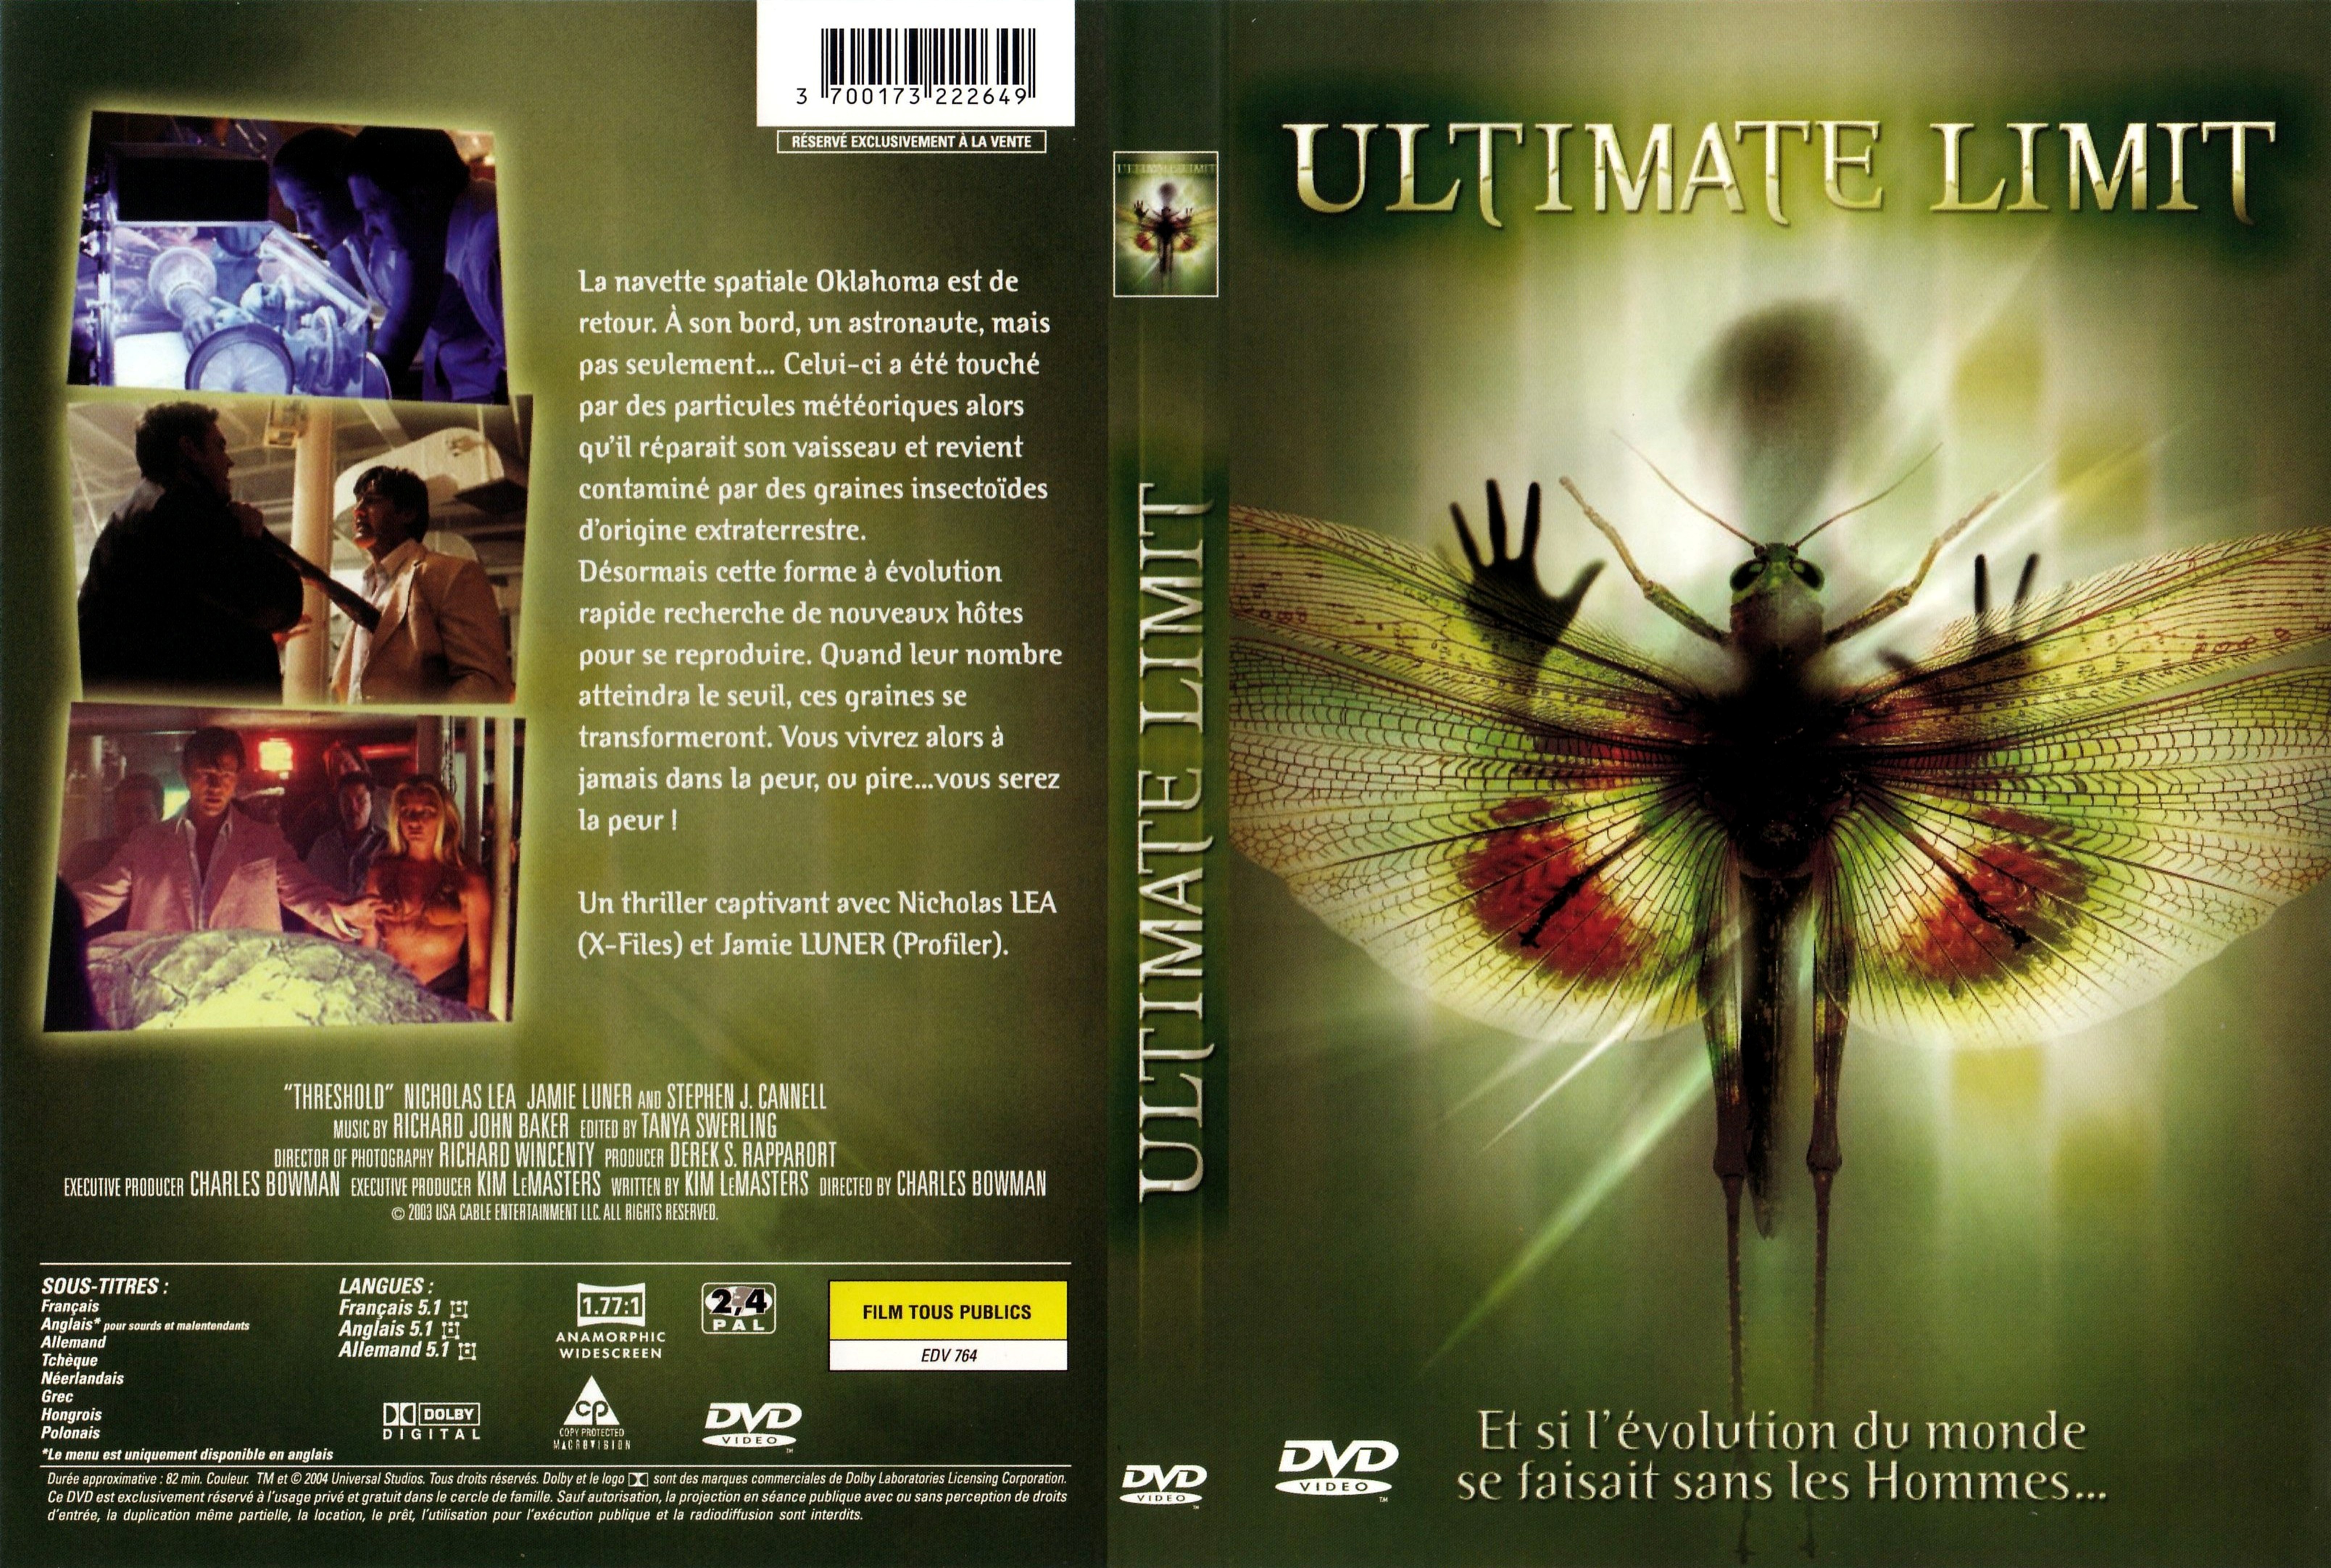 Jaquette DVD Ultimate limit